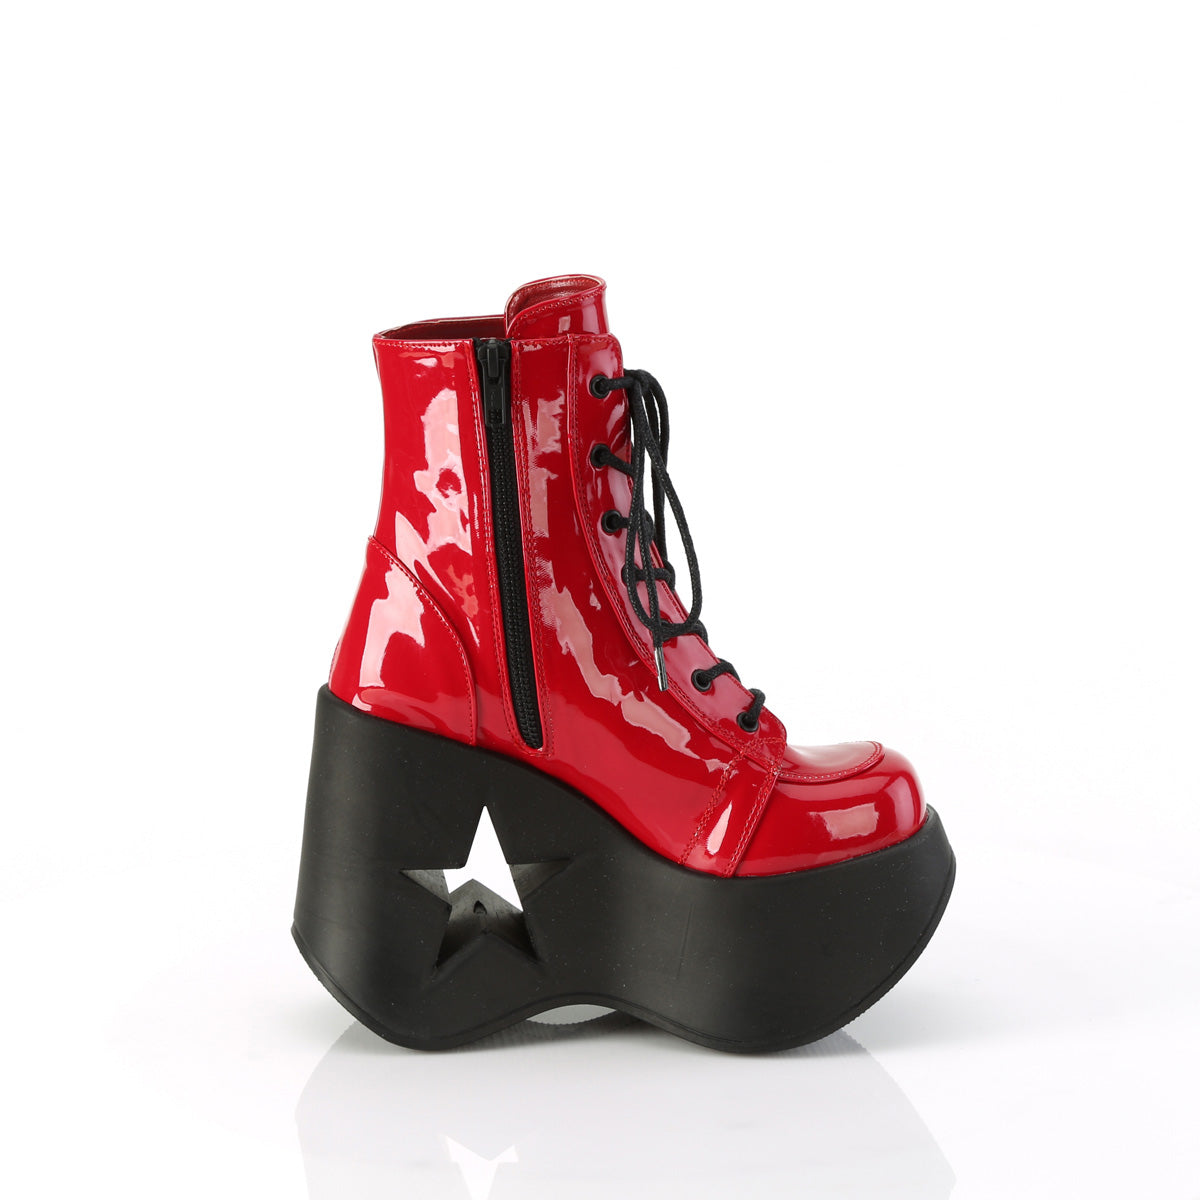 DYNAMITE-106 Demonia Red Patent Women's Ankle Boots [Demonia Cult Alternative Footwear]